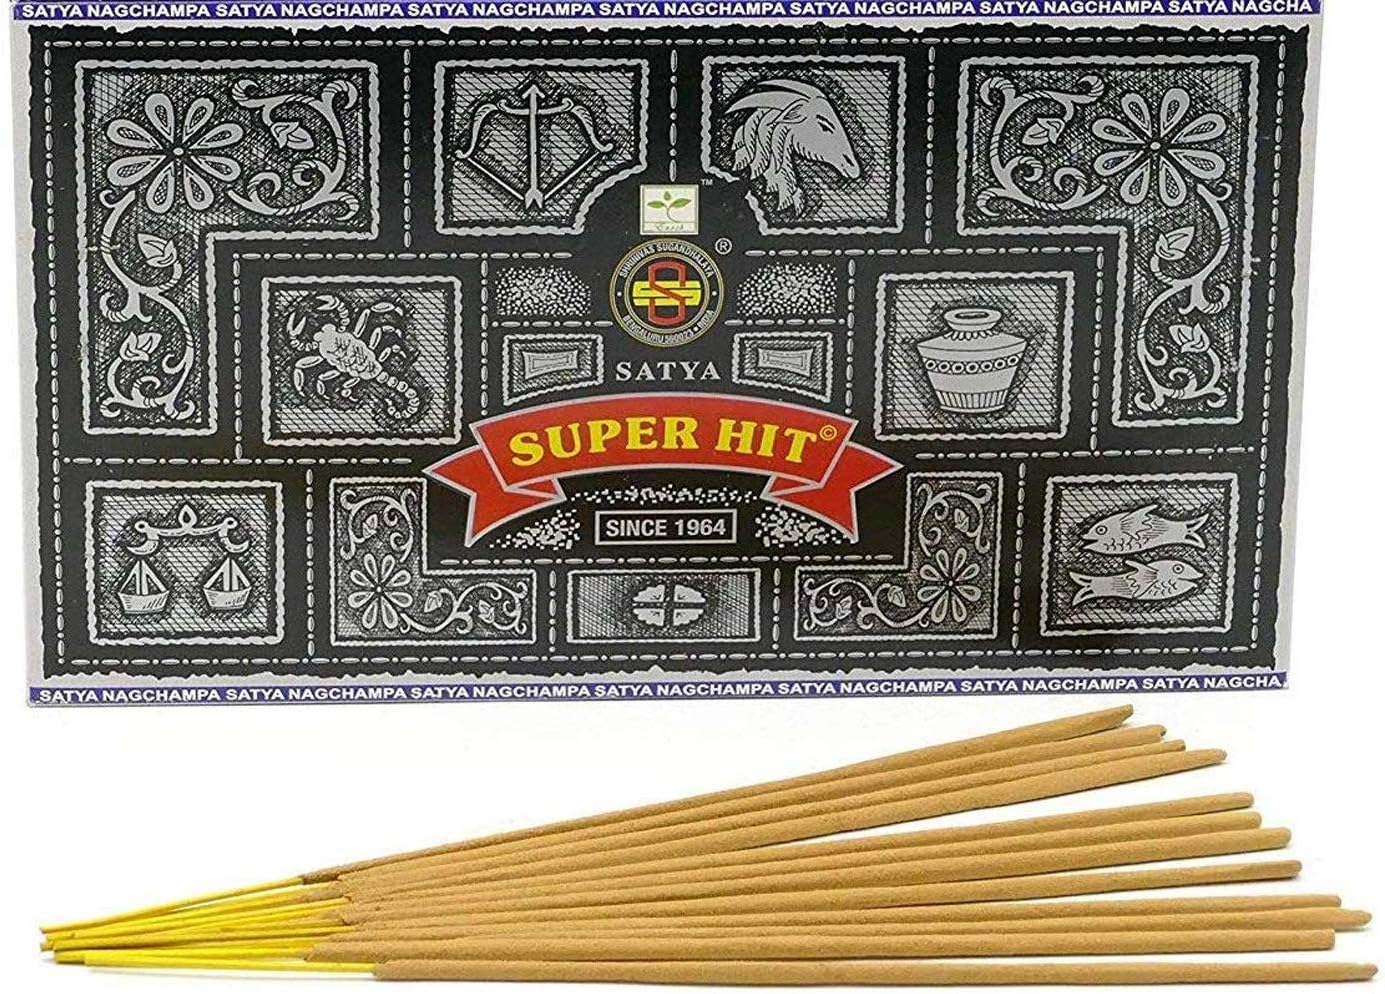 Satya Nag Champa Superhit Incense Sticks (Whole Case), Box of 12 Packs, Black